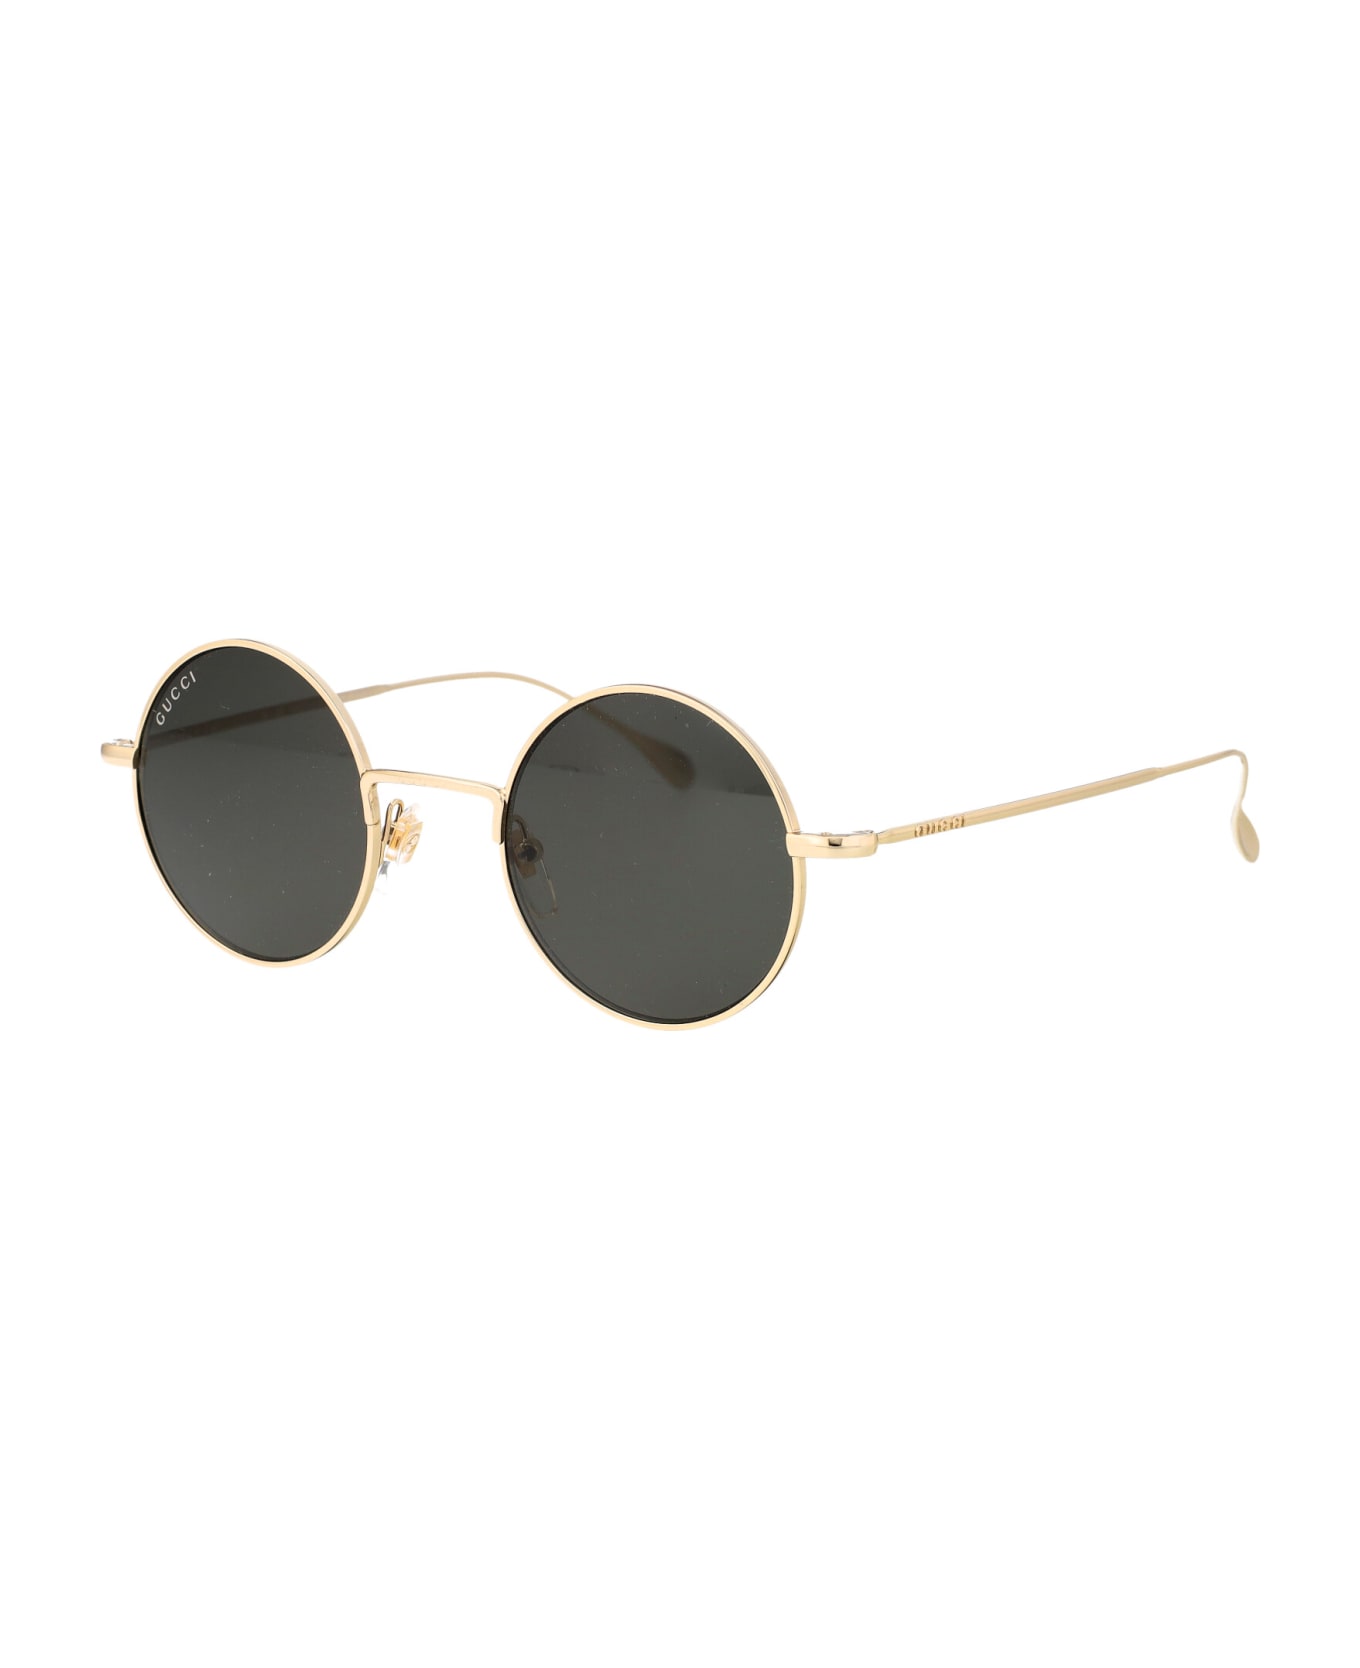 Gucci Eyewear Gg1649s Sunglasses - 007 GOLD GOLD GREY